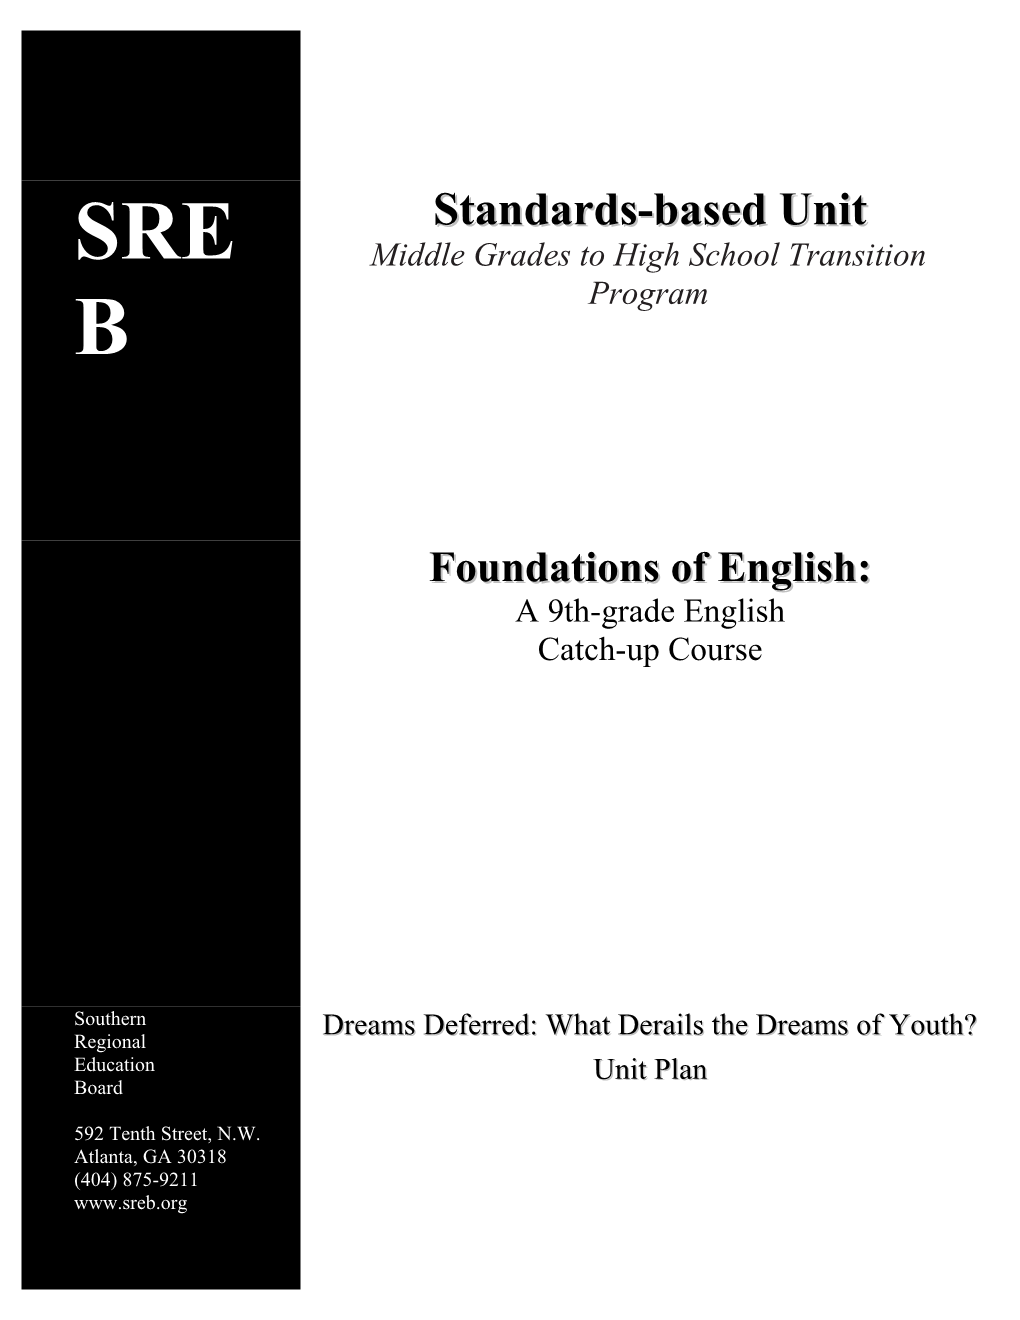 Standards-Based Unit Middle Grades to High School Transition Program